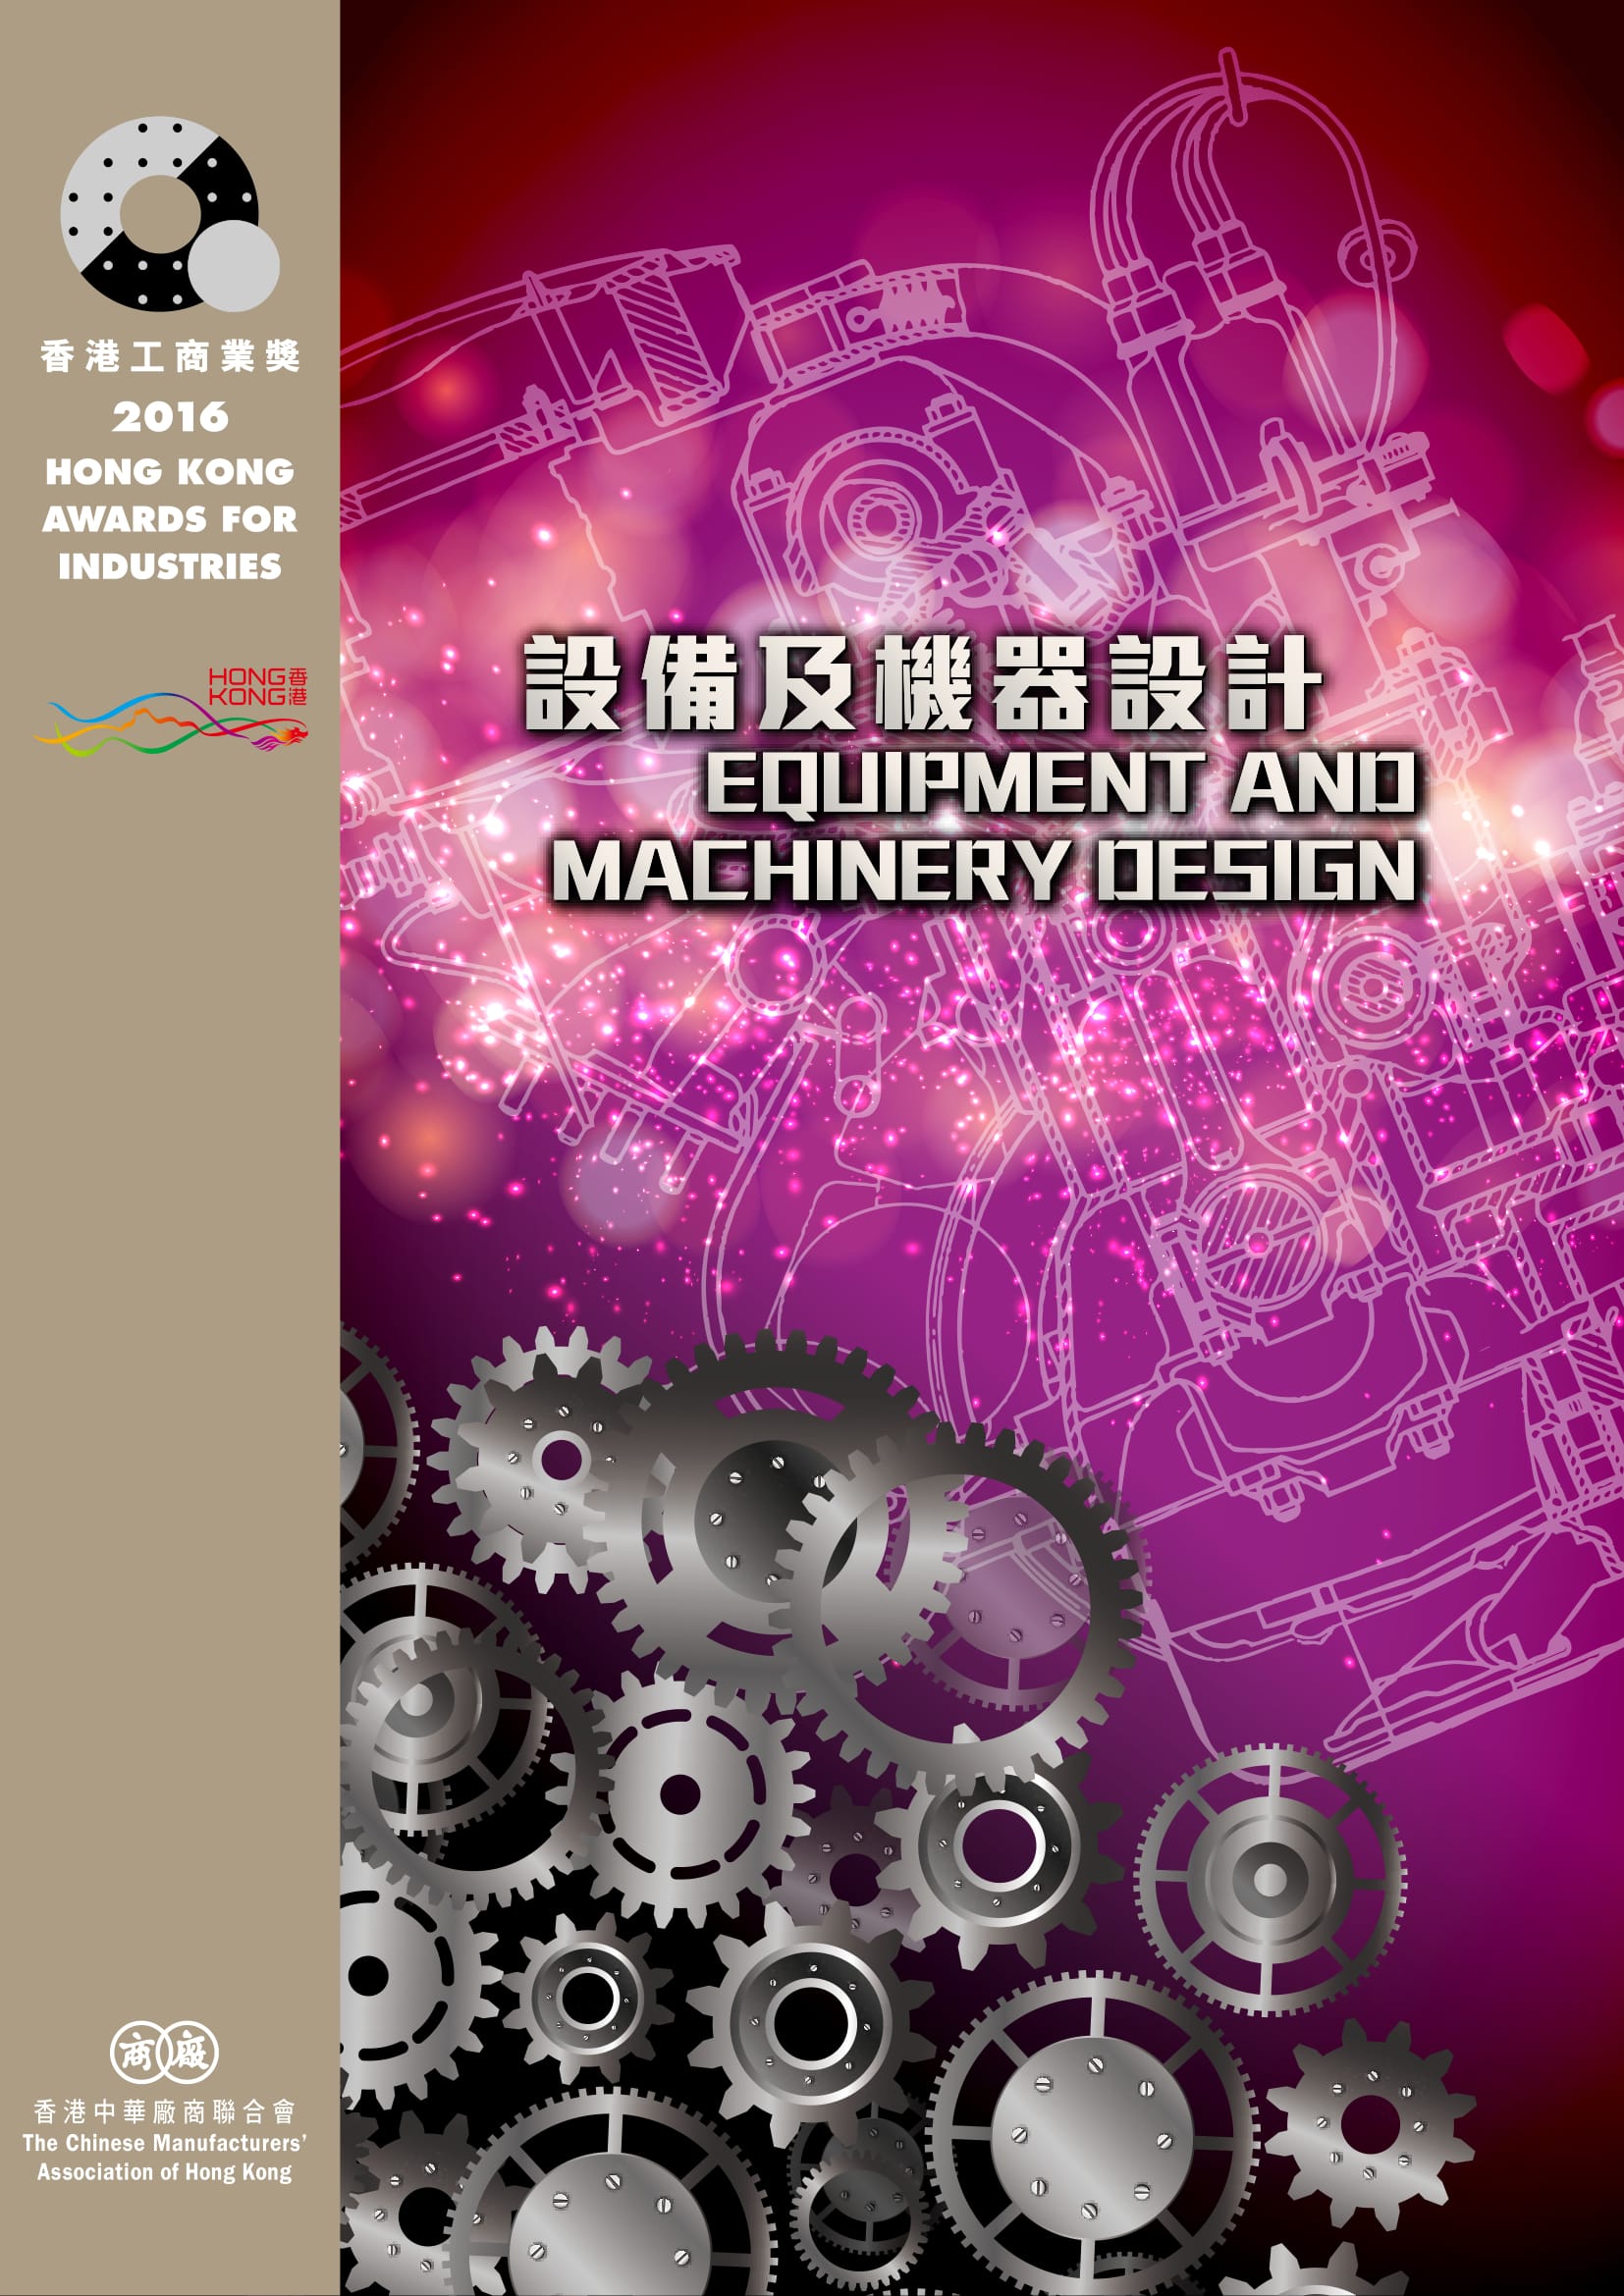 2016 Winning Brochure of the Equipment and Machinery Design